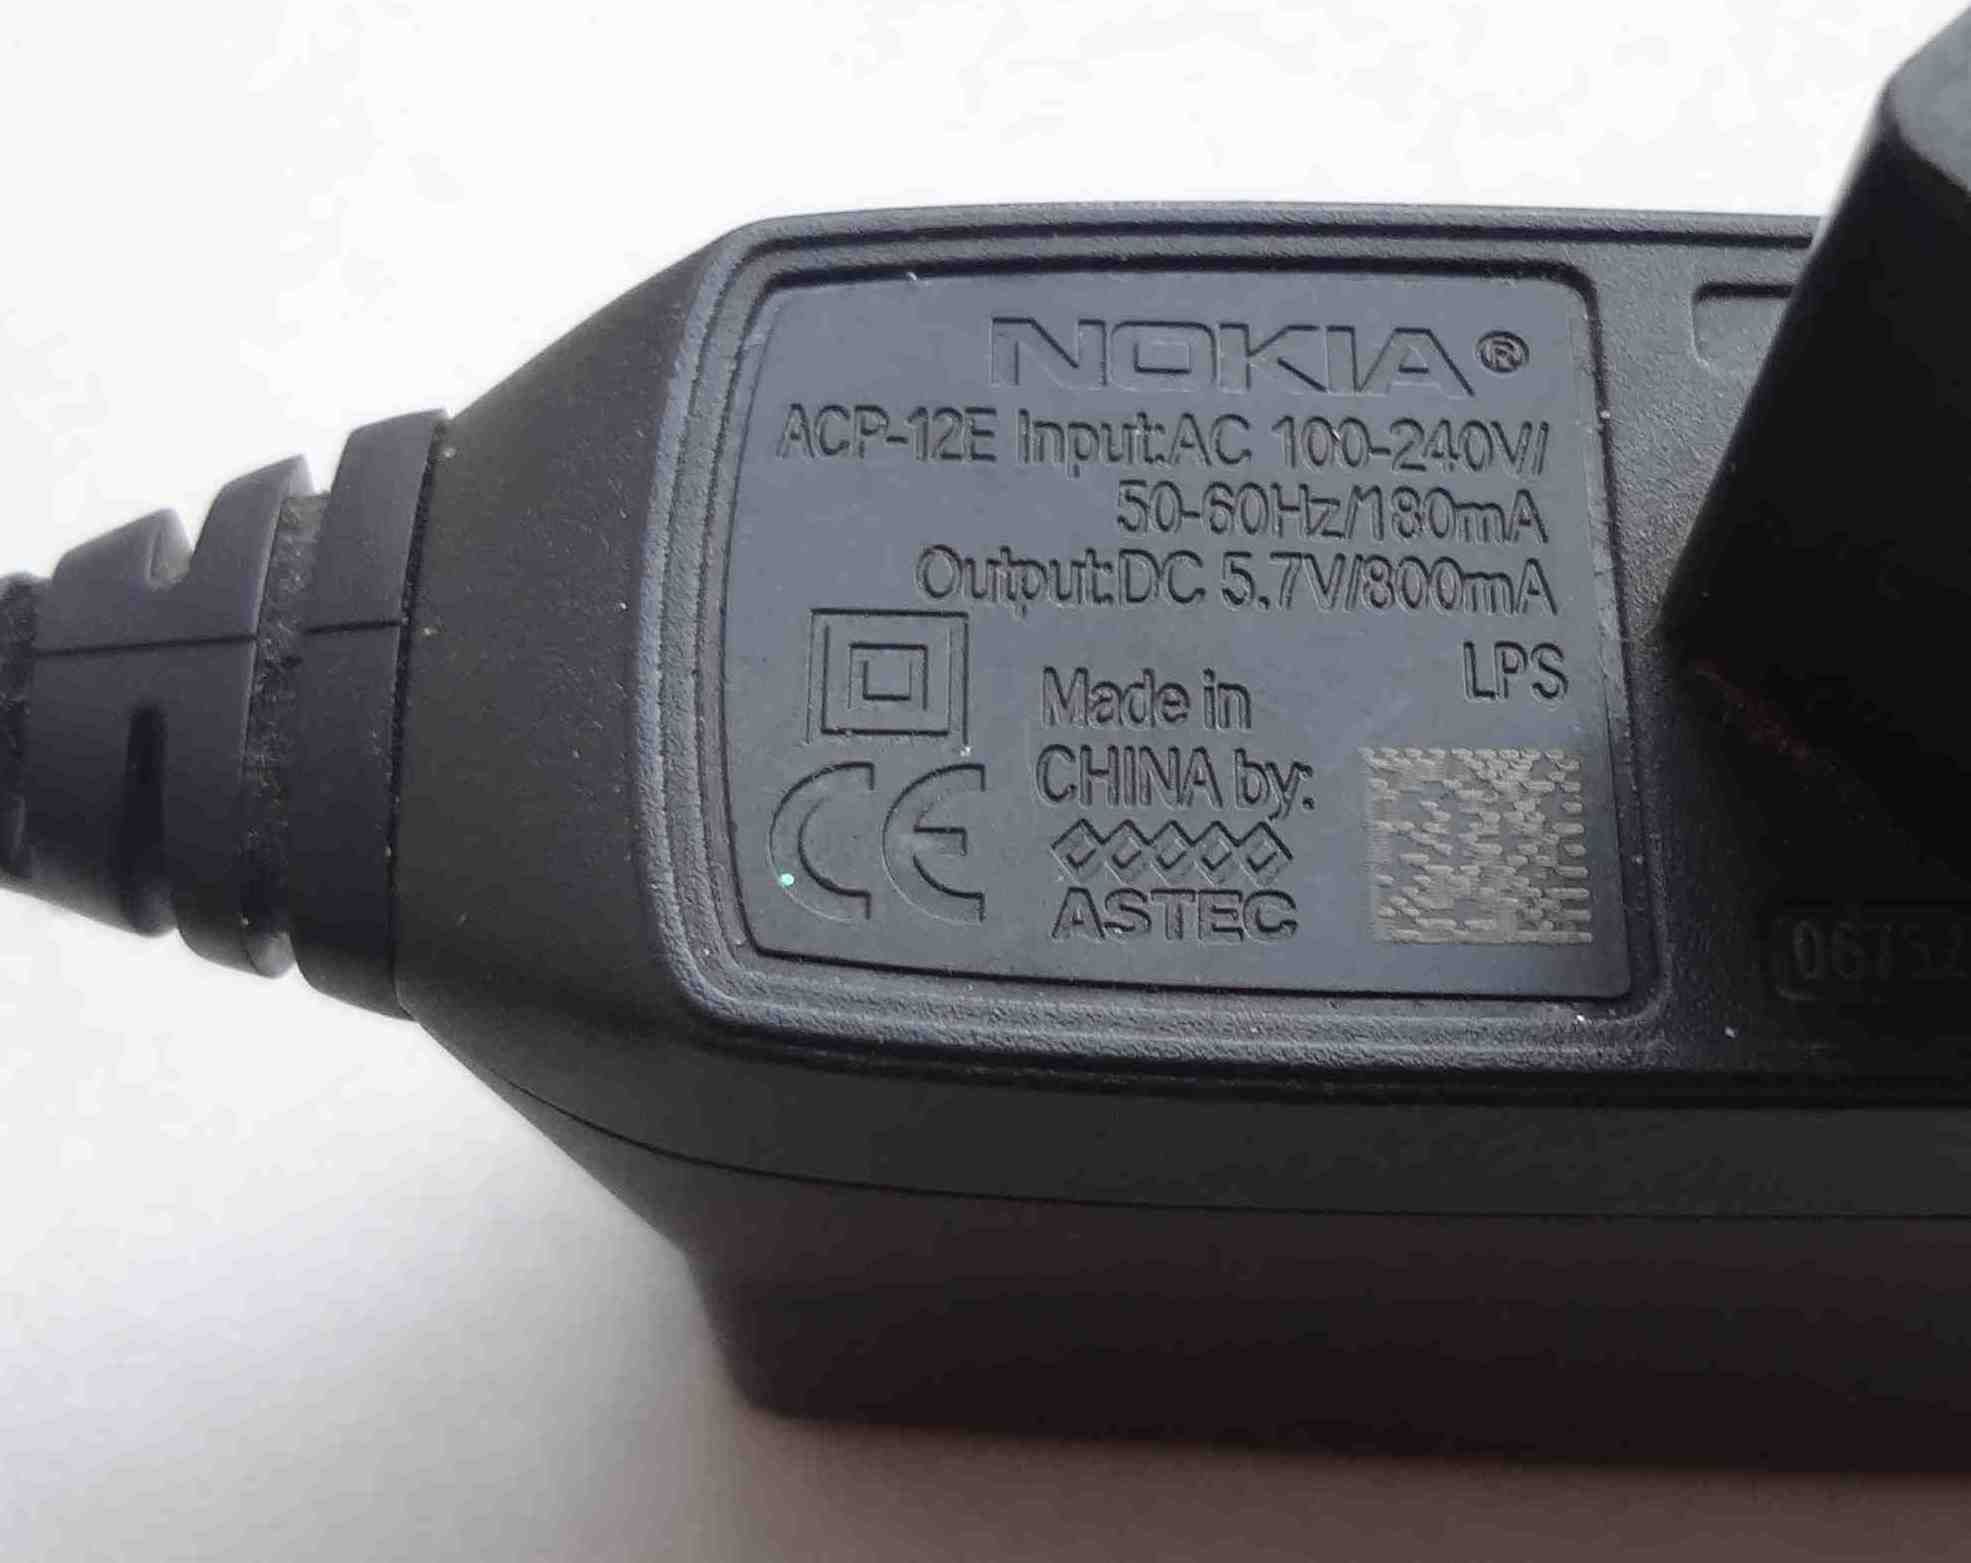 Зарядное устройство Nokia 5.7V 800mA ACP-12E адаптер